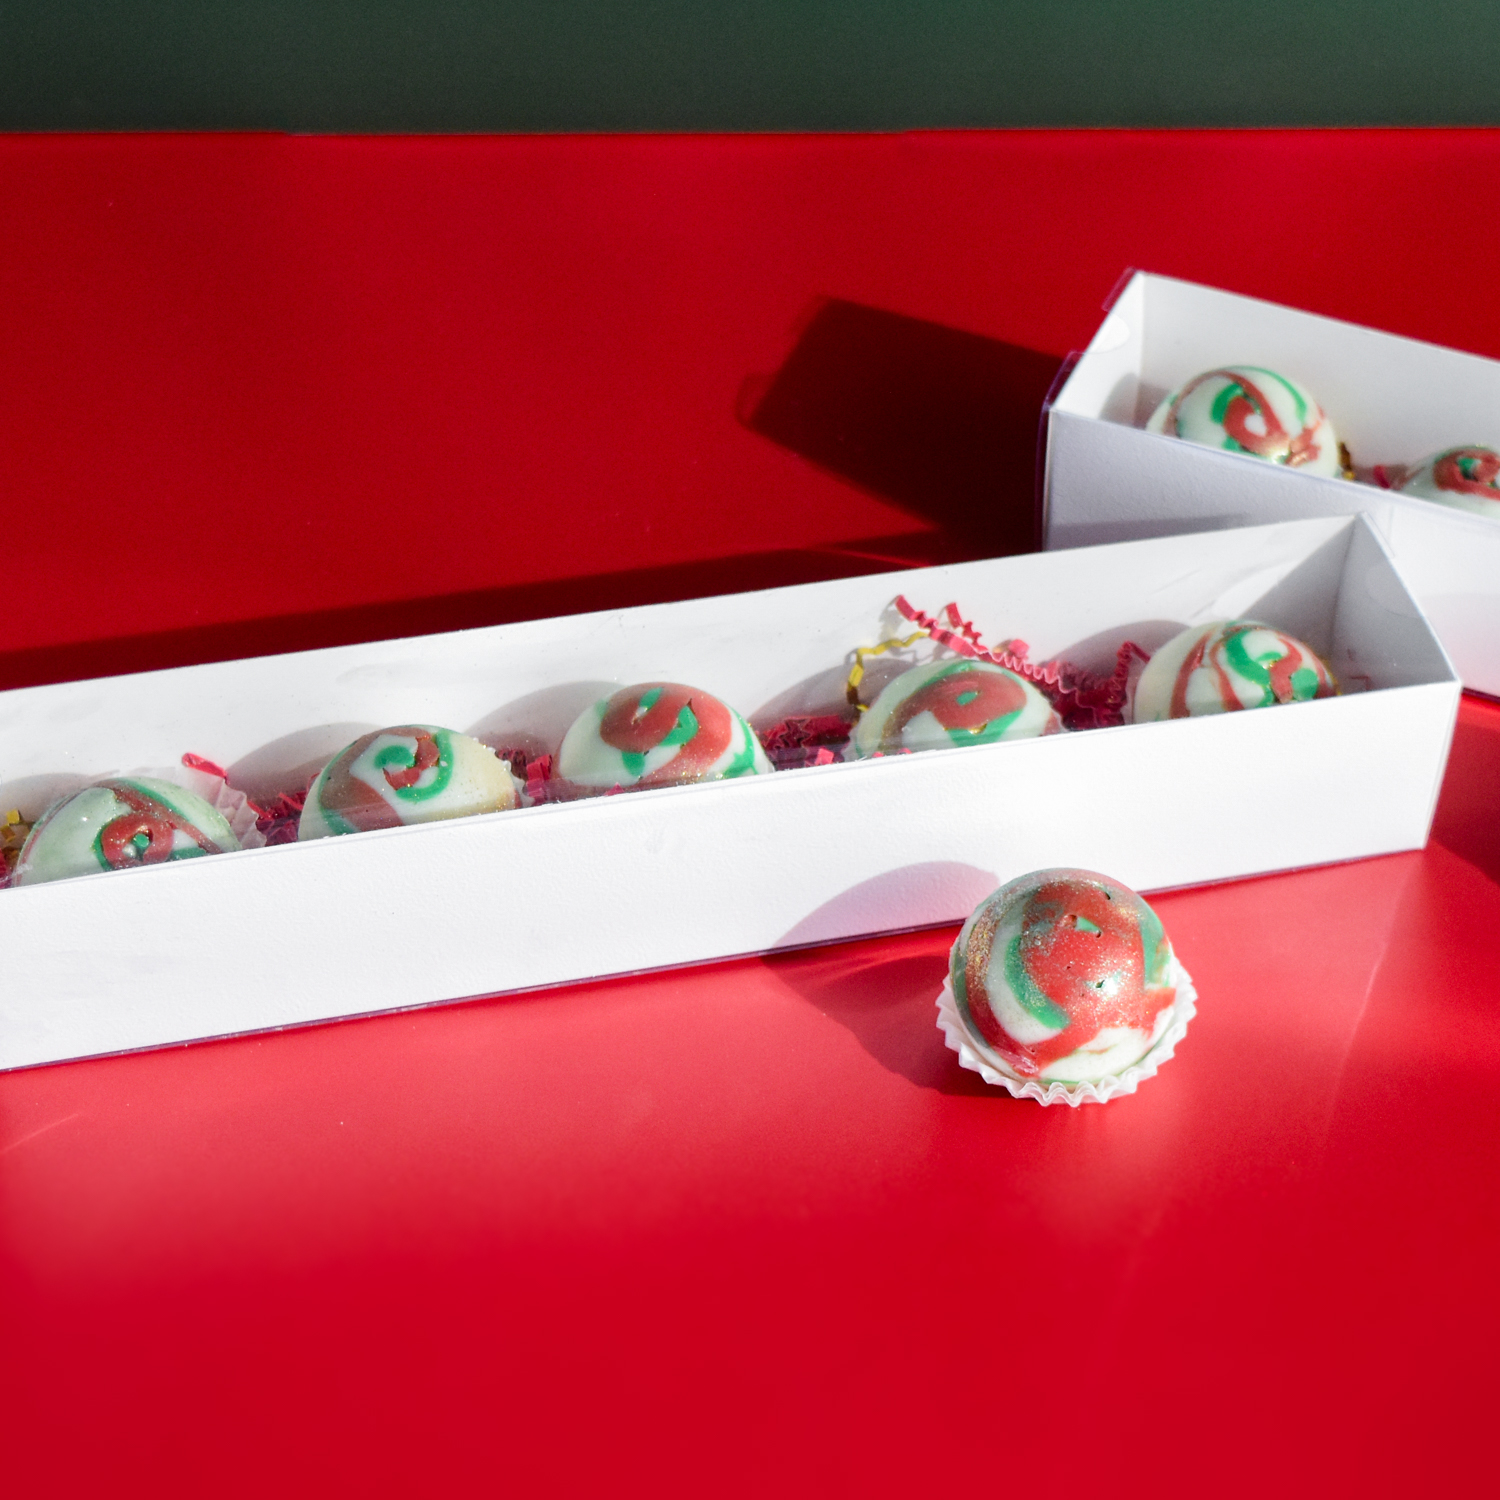 Neighbor Christmas Gift: Homemade Peppermint Hot Cocoa Bombs Plus Free Printable